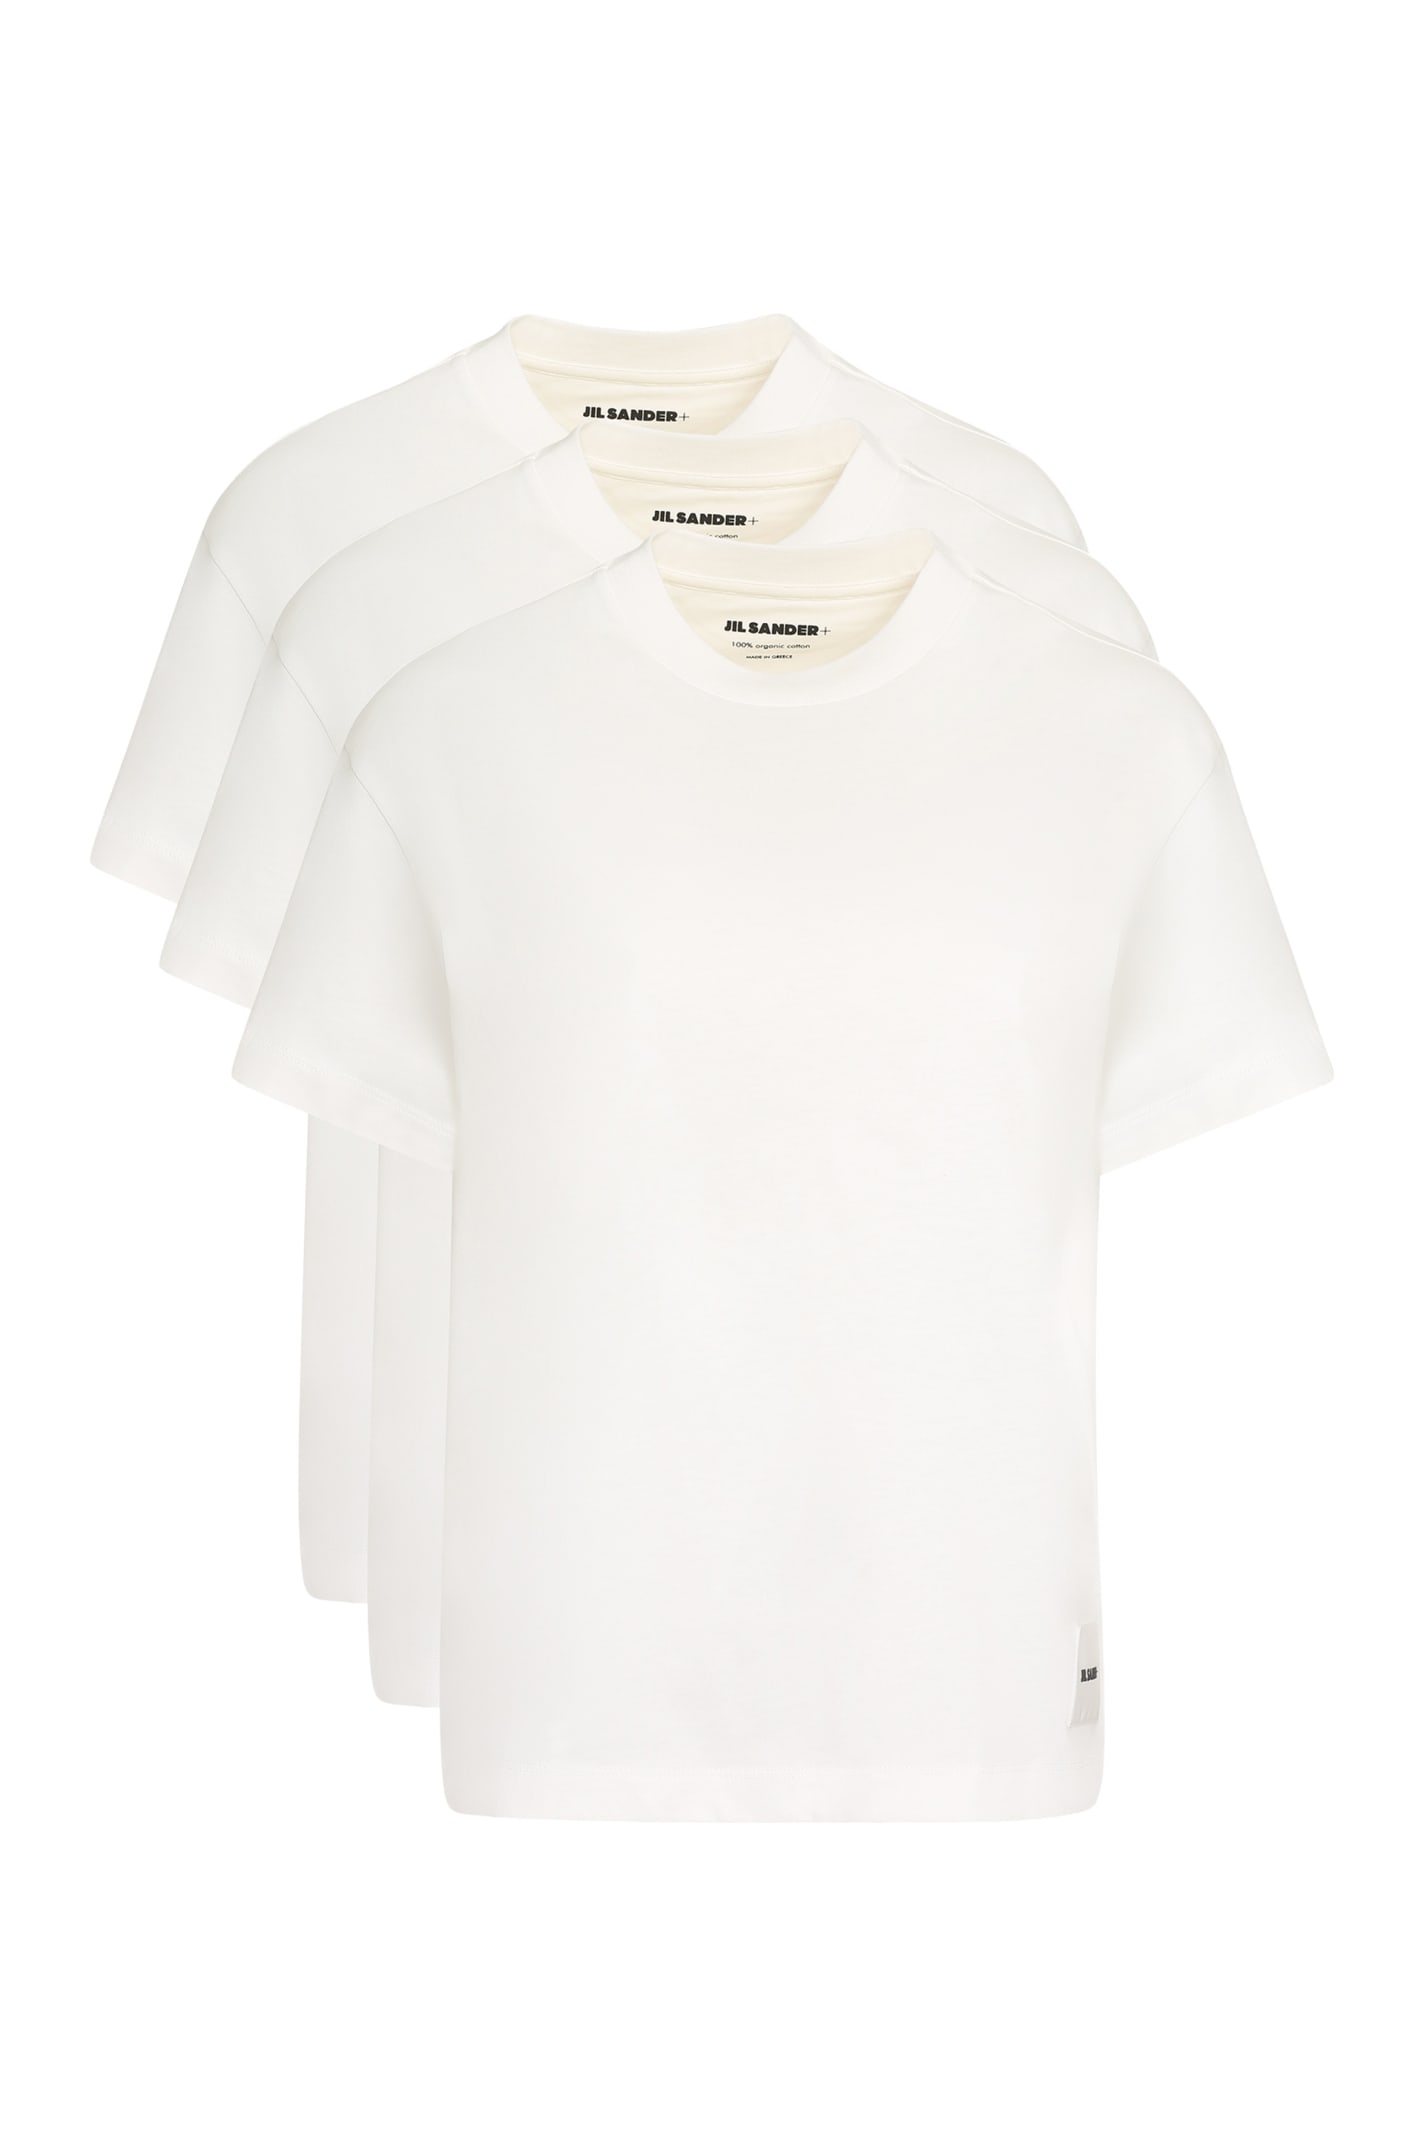 Jil Sander Set Of Three Cotton T-shirts